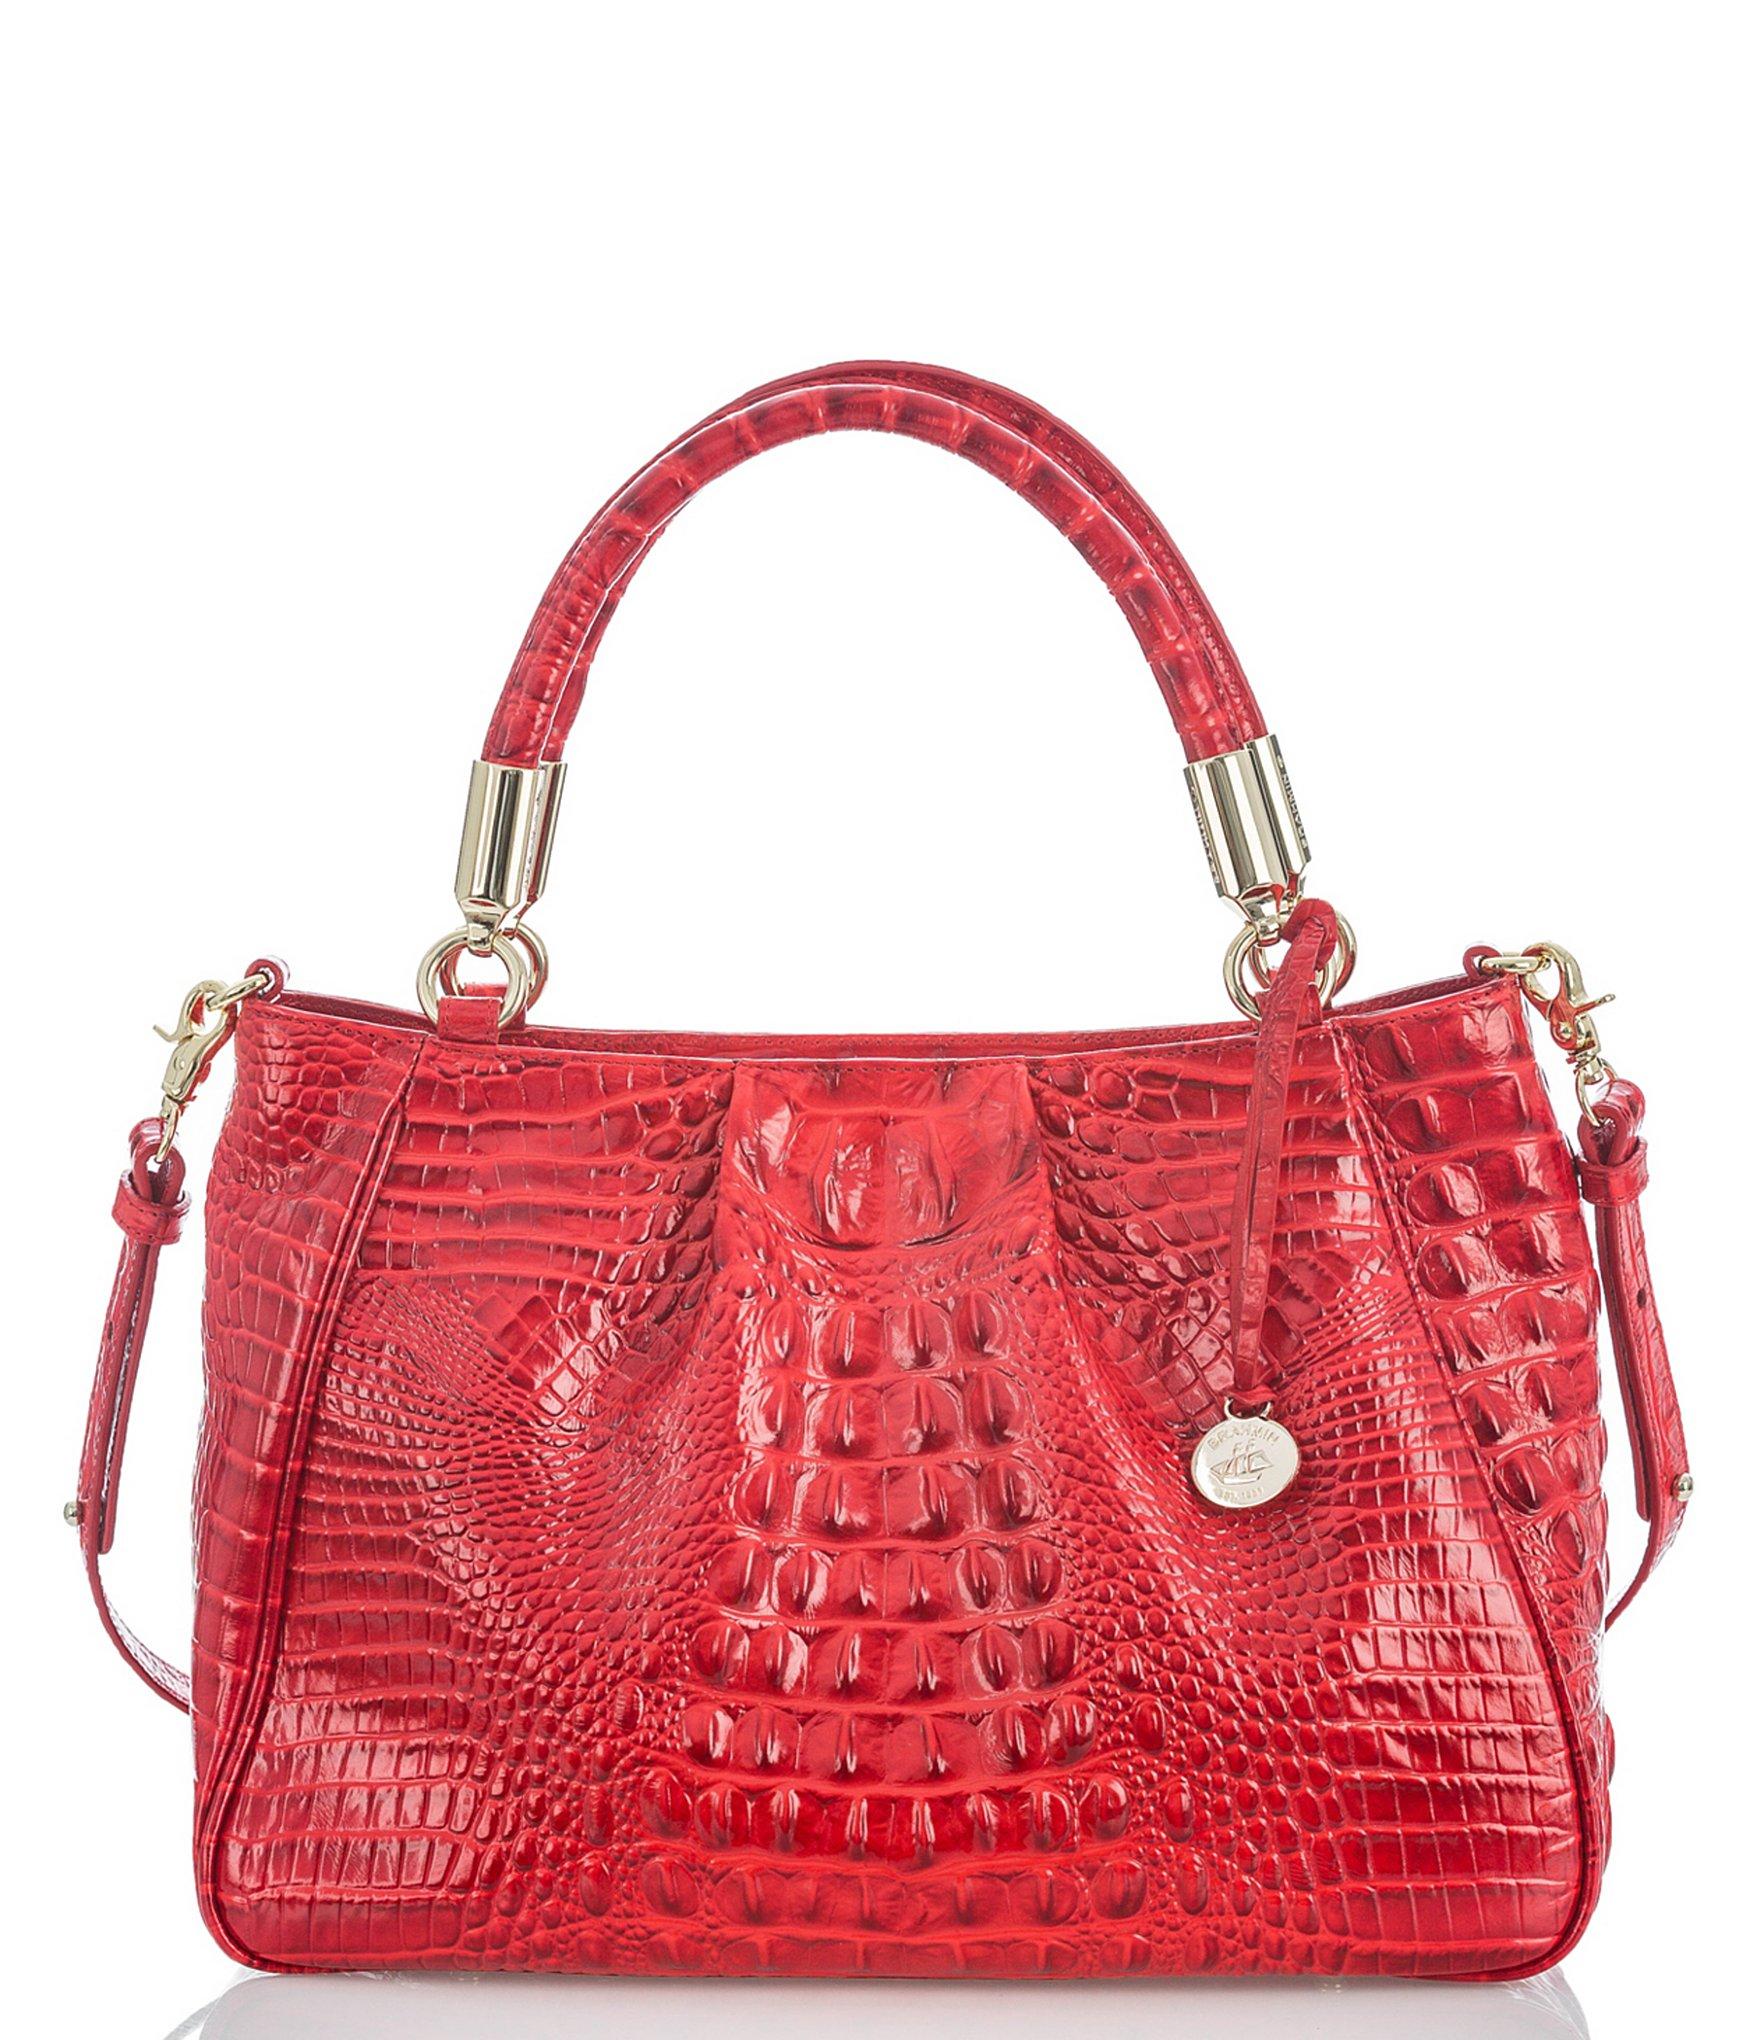 Lyst - Brahmin Melbourne Collection Ruby Croco-embossed Shoulder Bag in Red